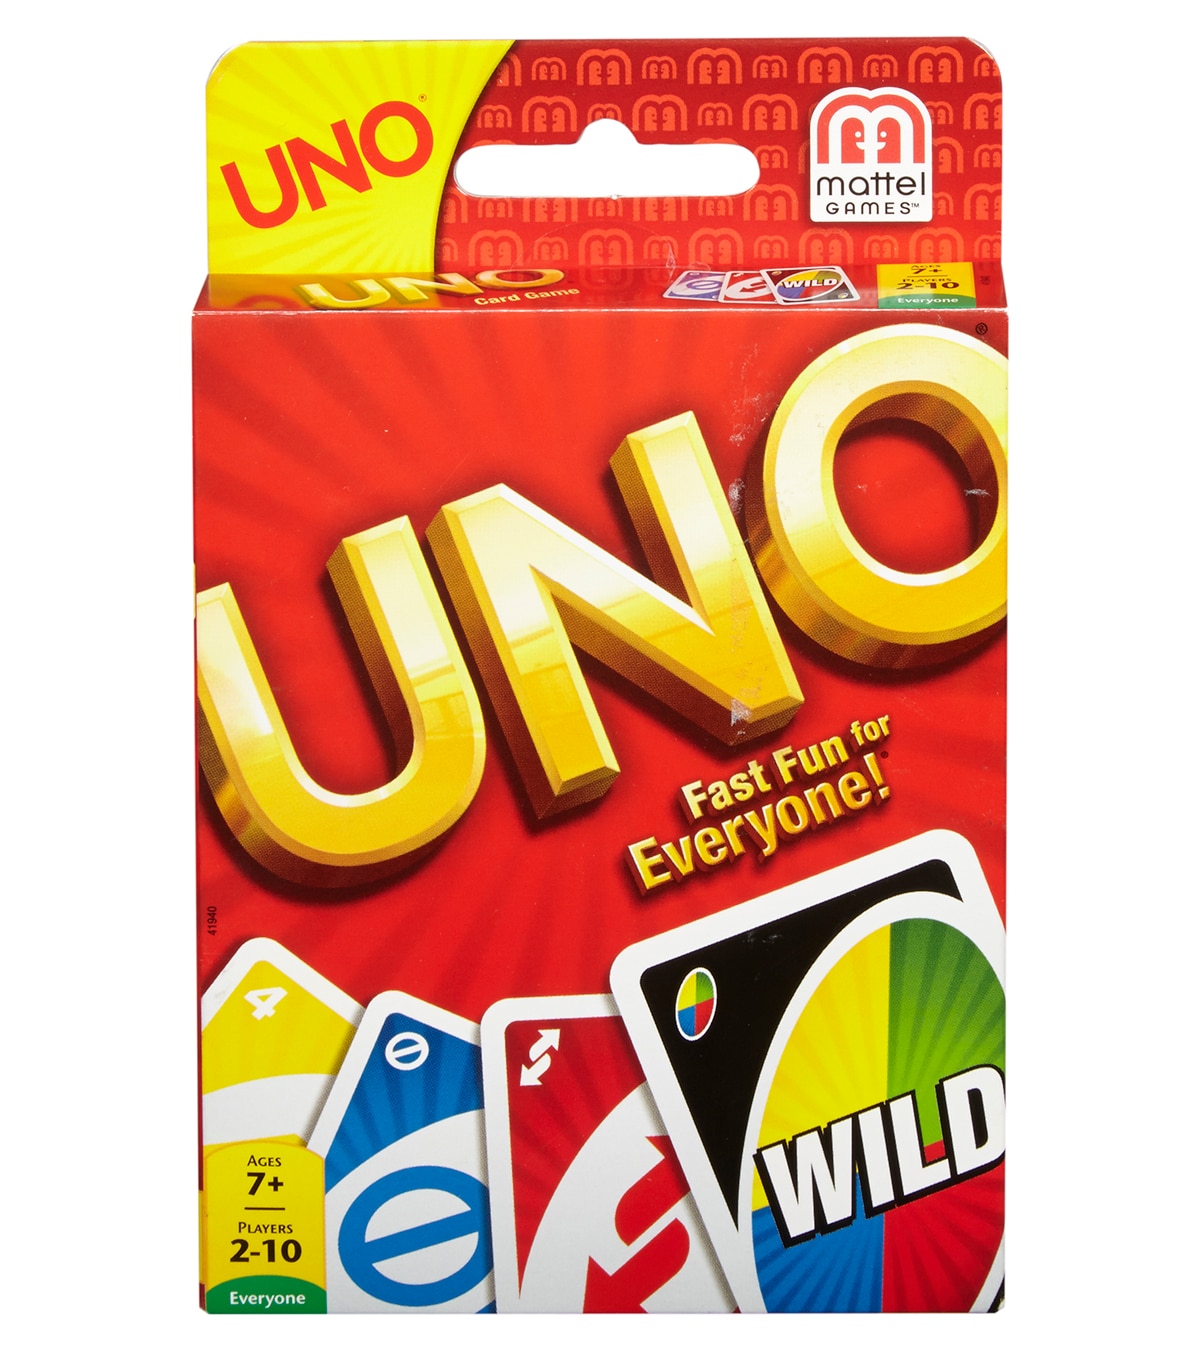 Mattel Games UNO Card Game JOANN